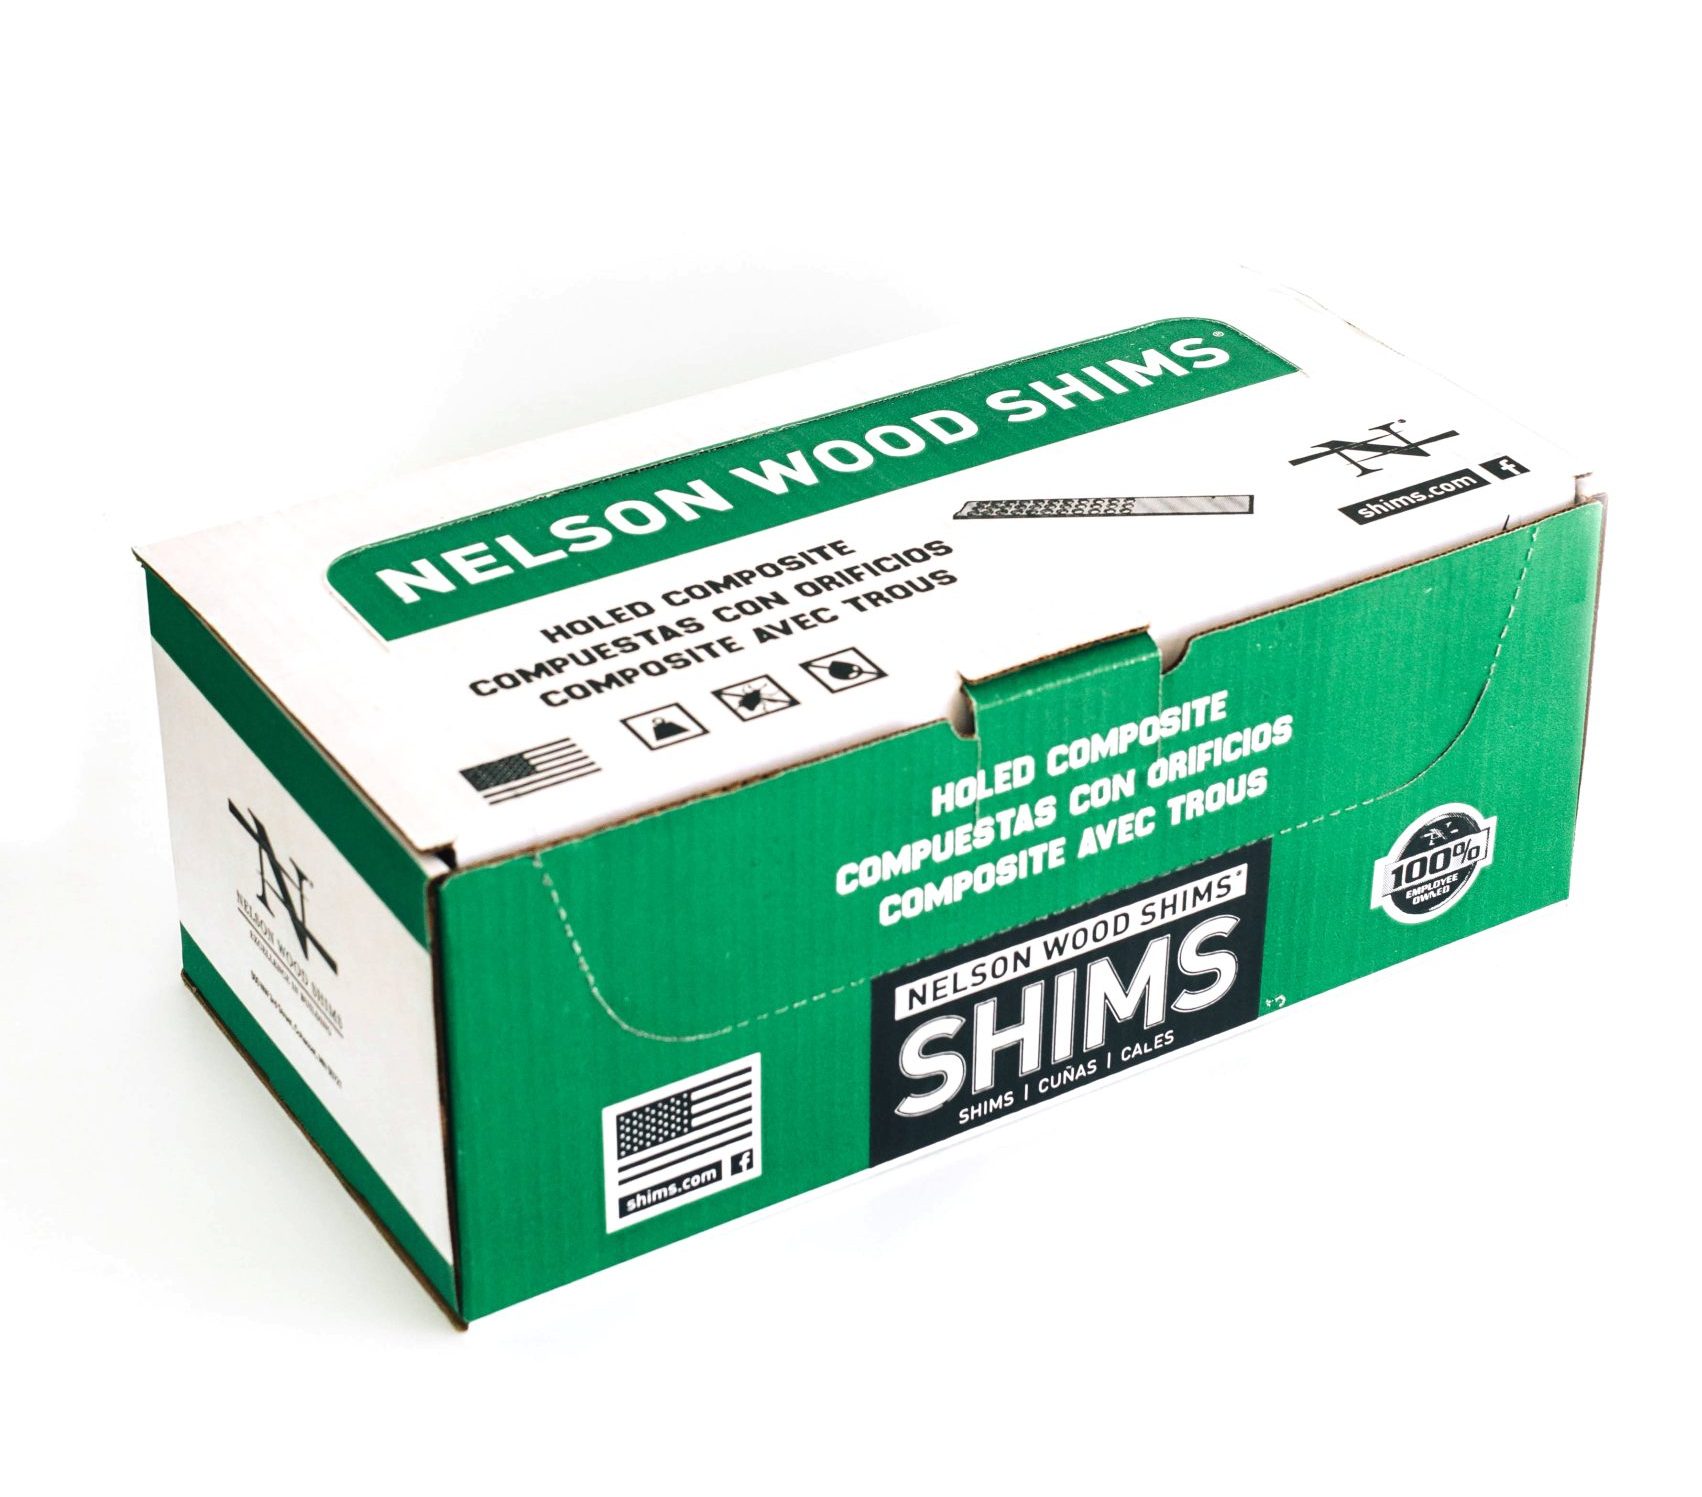 Holed Composite Bundle – 8 Inch Composite Shims – Nelson Wood Shims